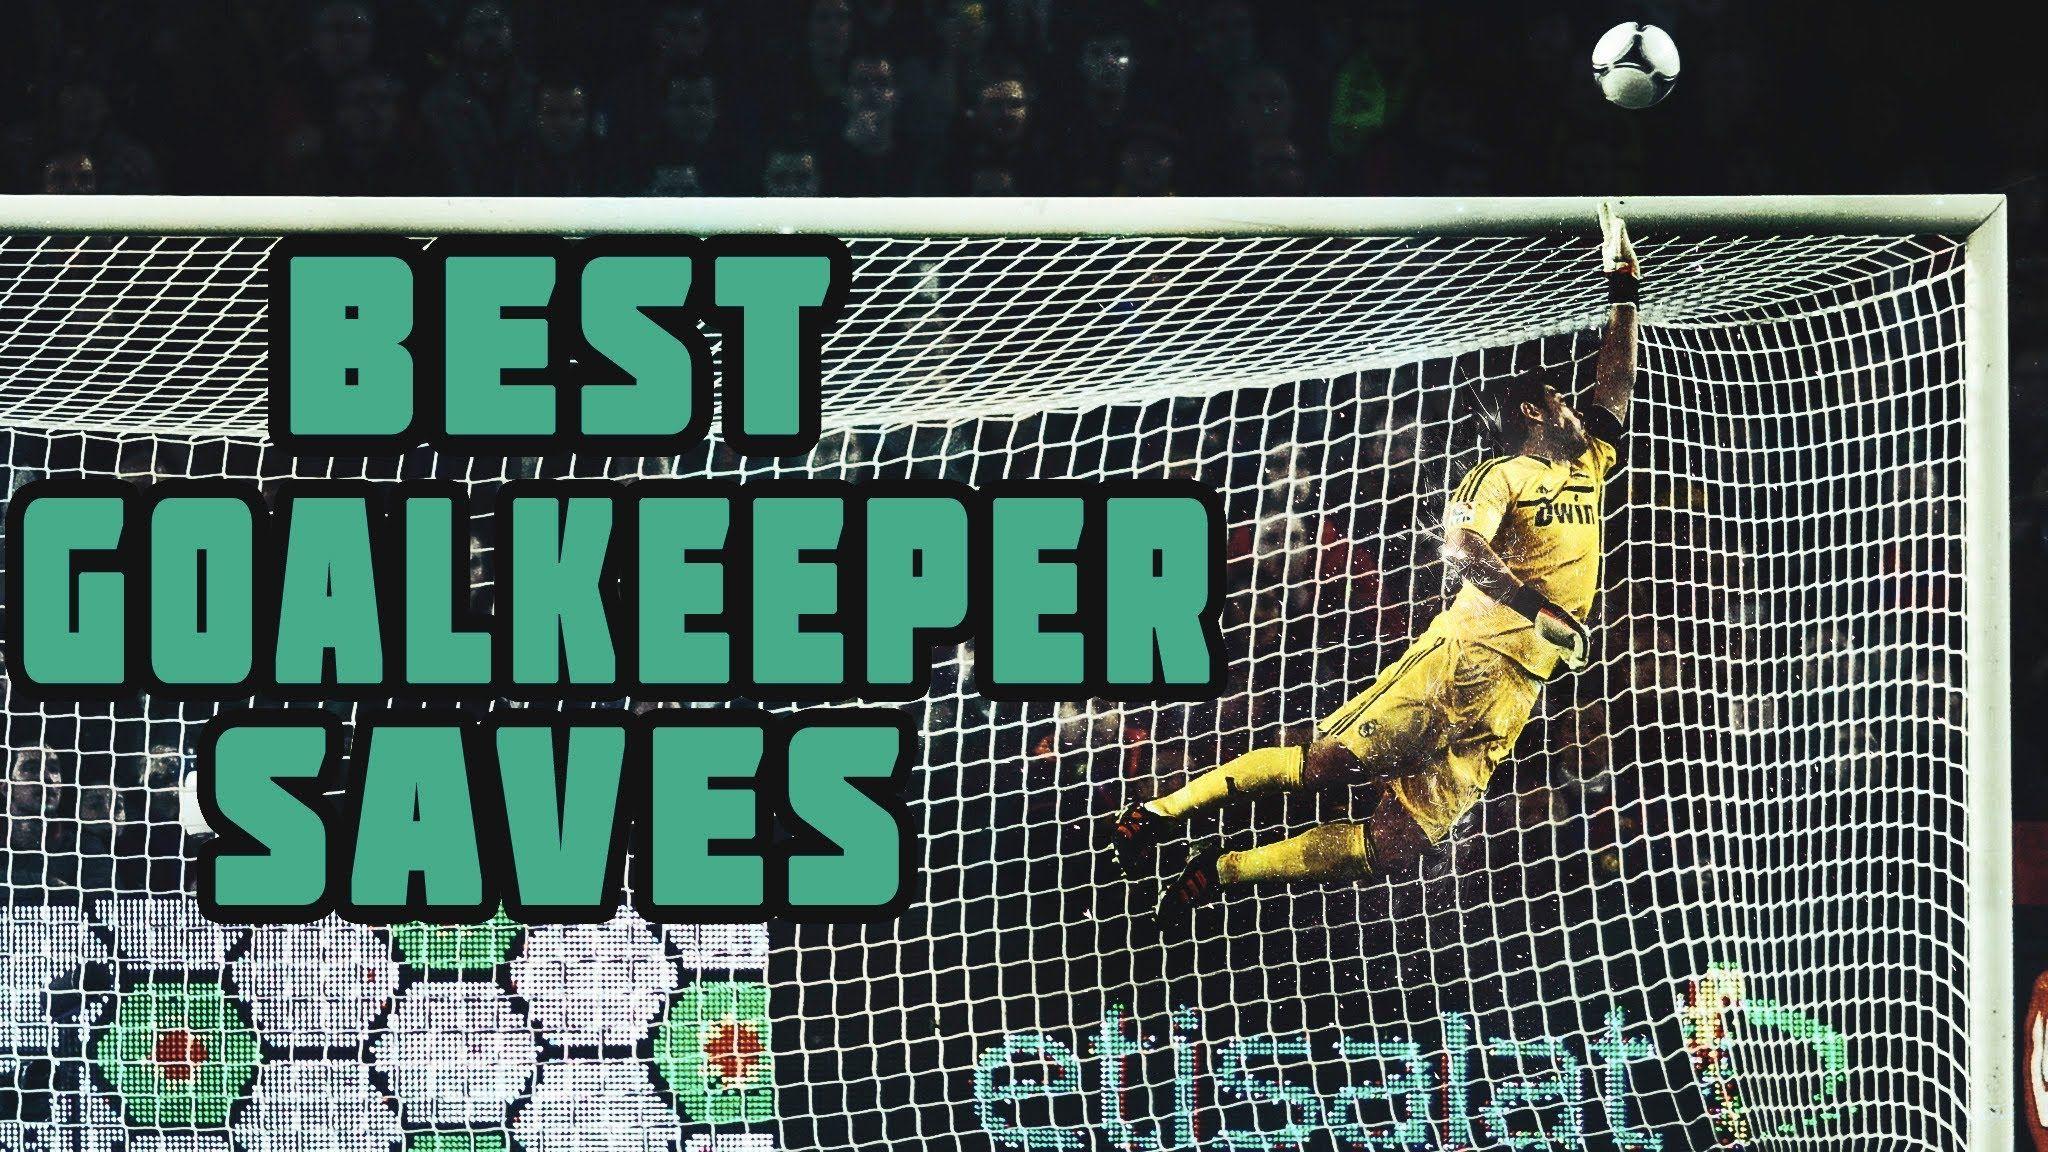 Best Goalkeeper Saves Vol.1 // Amazing!